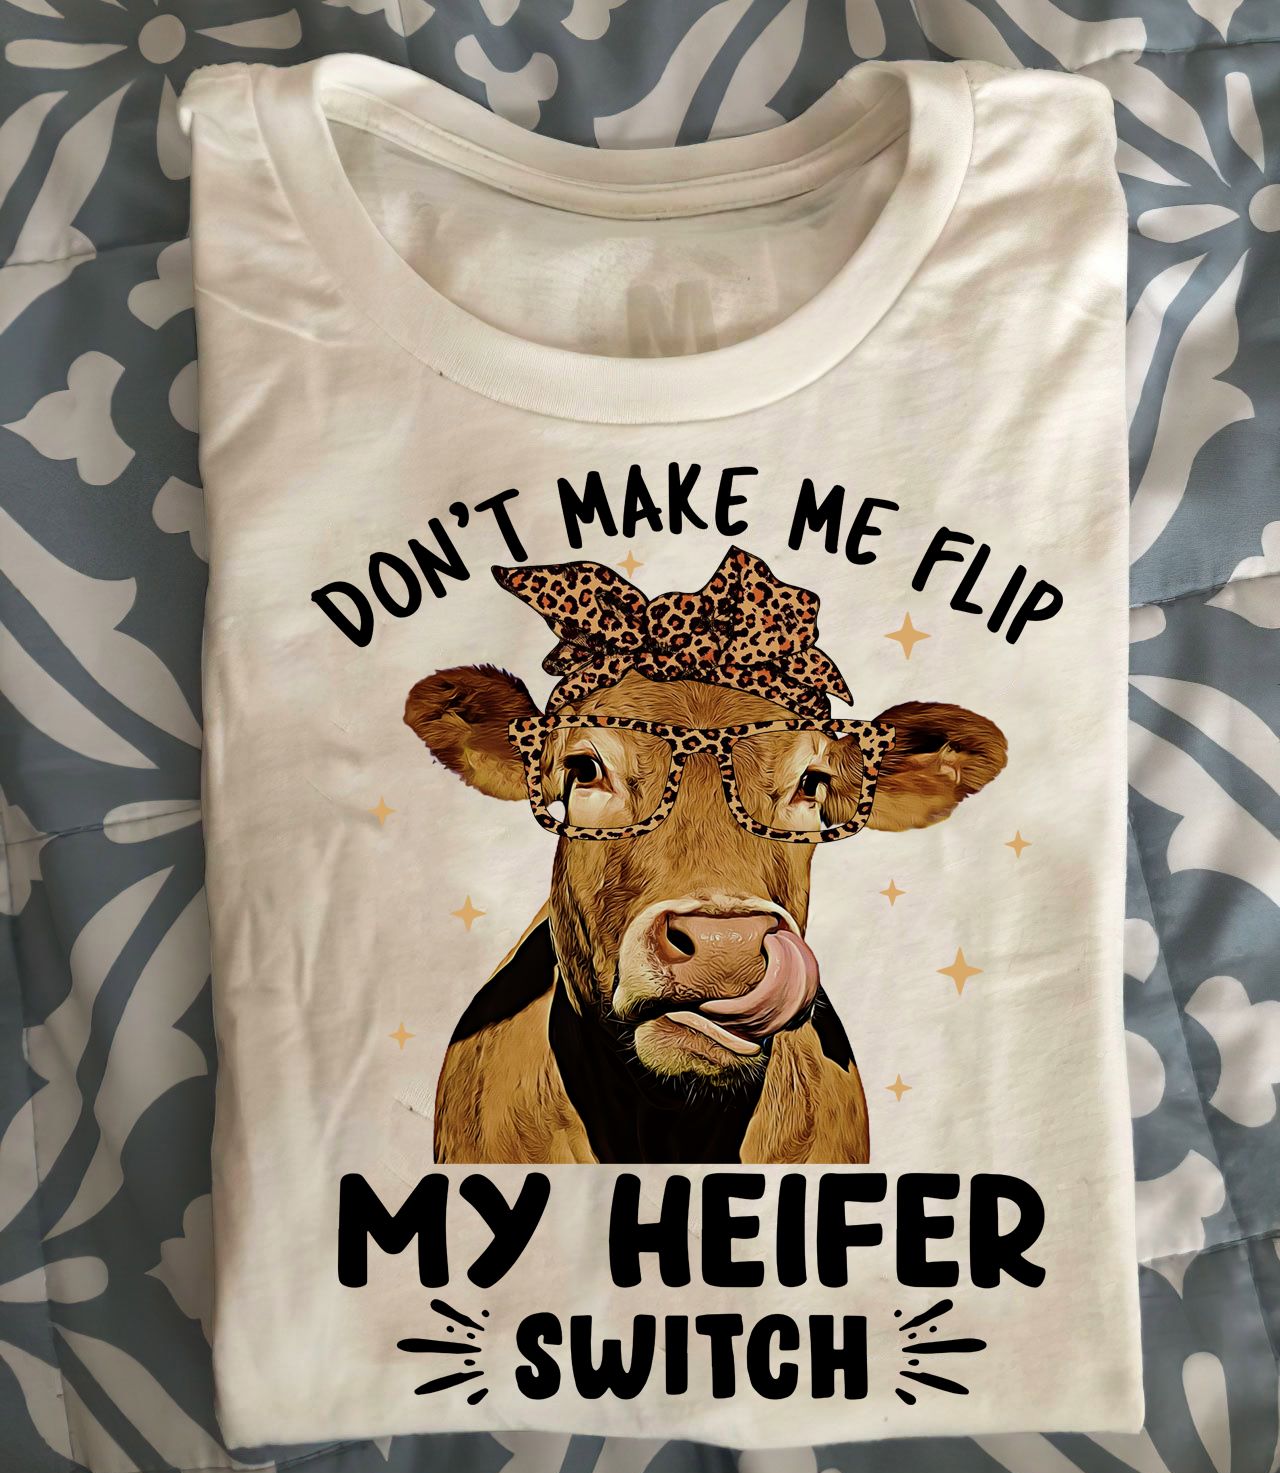 Don't make me flip my heifer switch - Slip cow